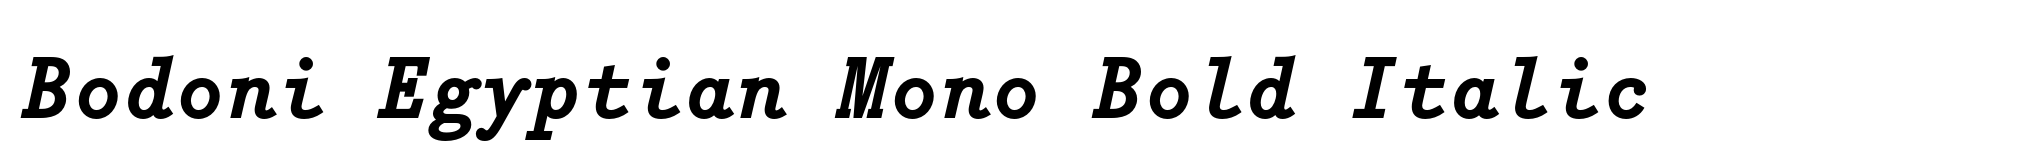 Bodoni Egyptian Mono Bold Italic image